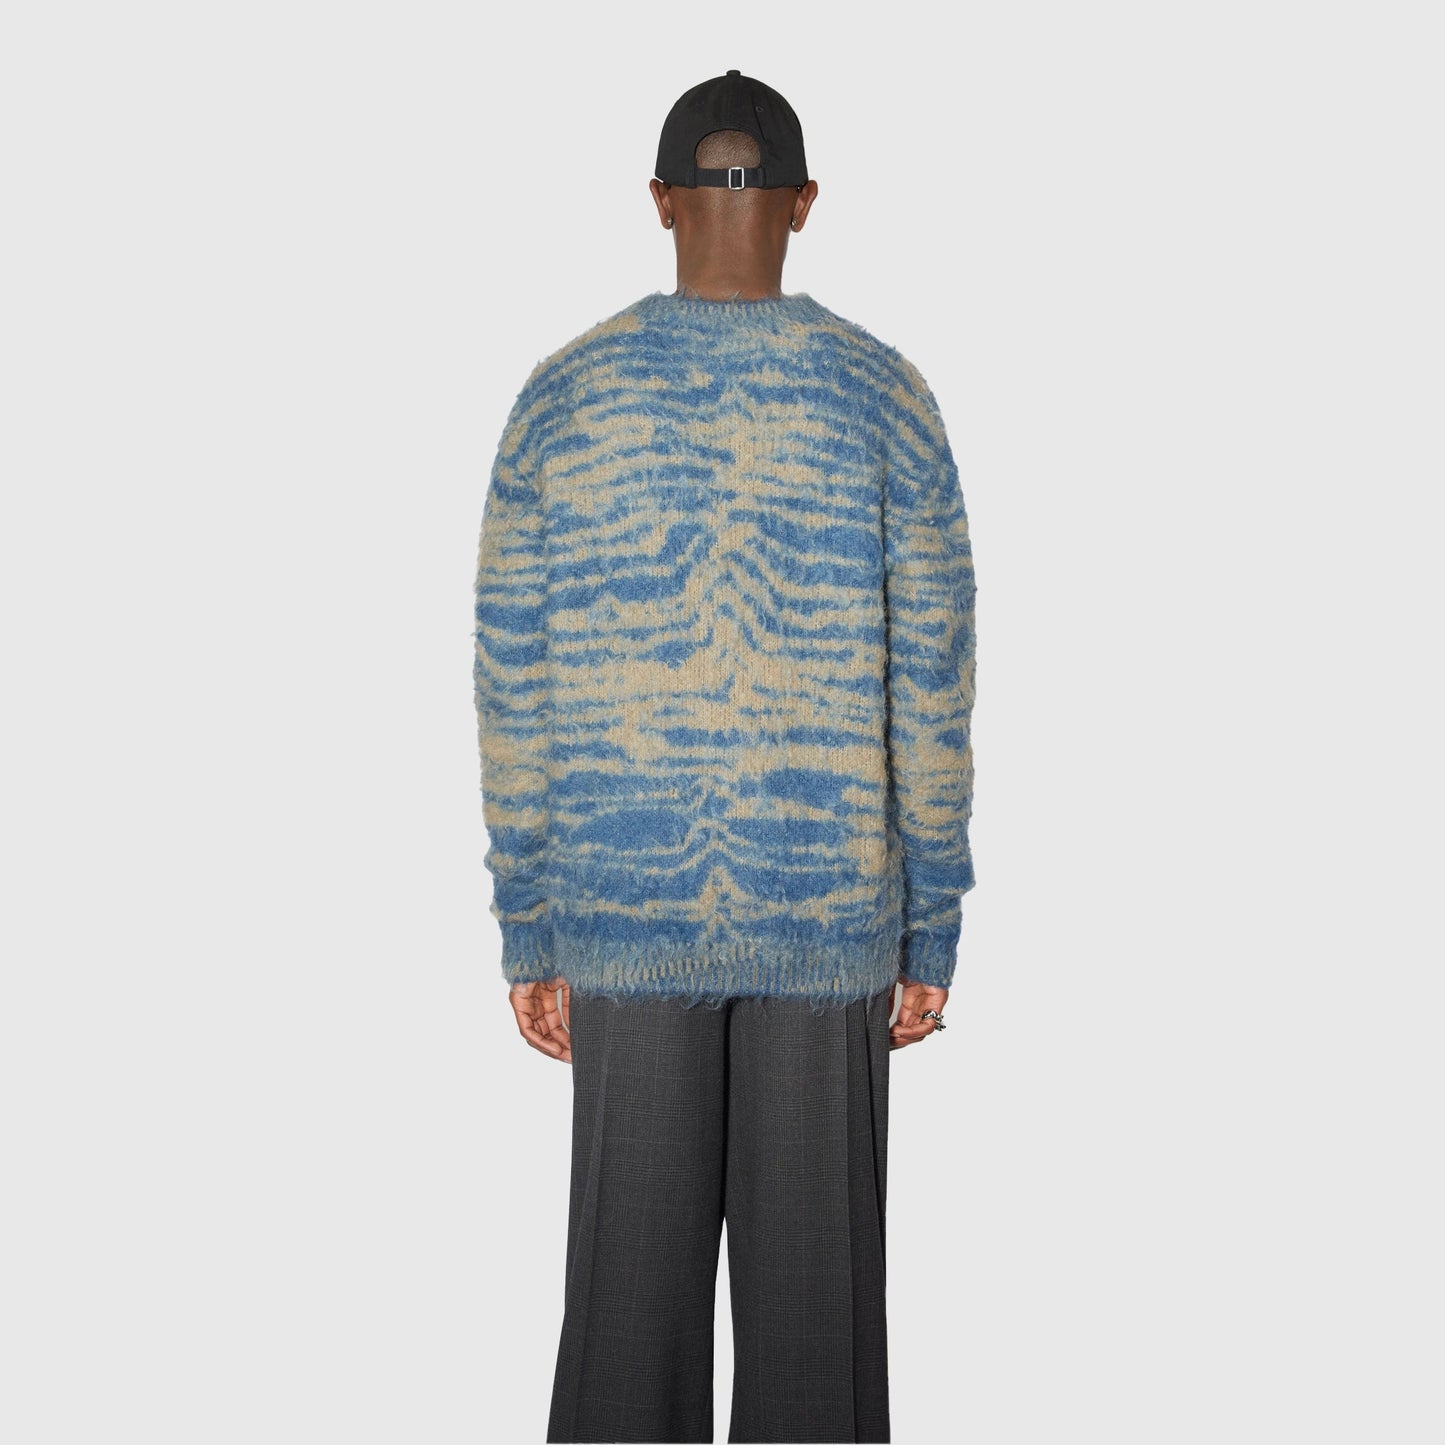 Acne Studios Crewneck Wool Jumper - Denim Blue / Dark Beige Knitwear Acne Studios 